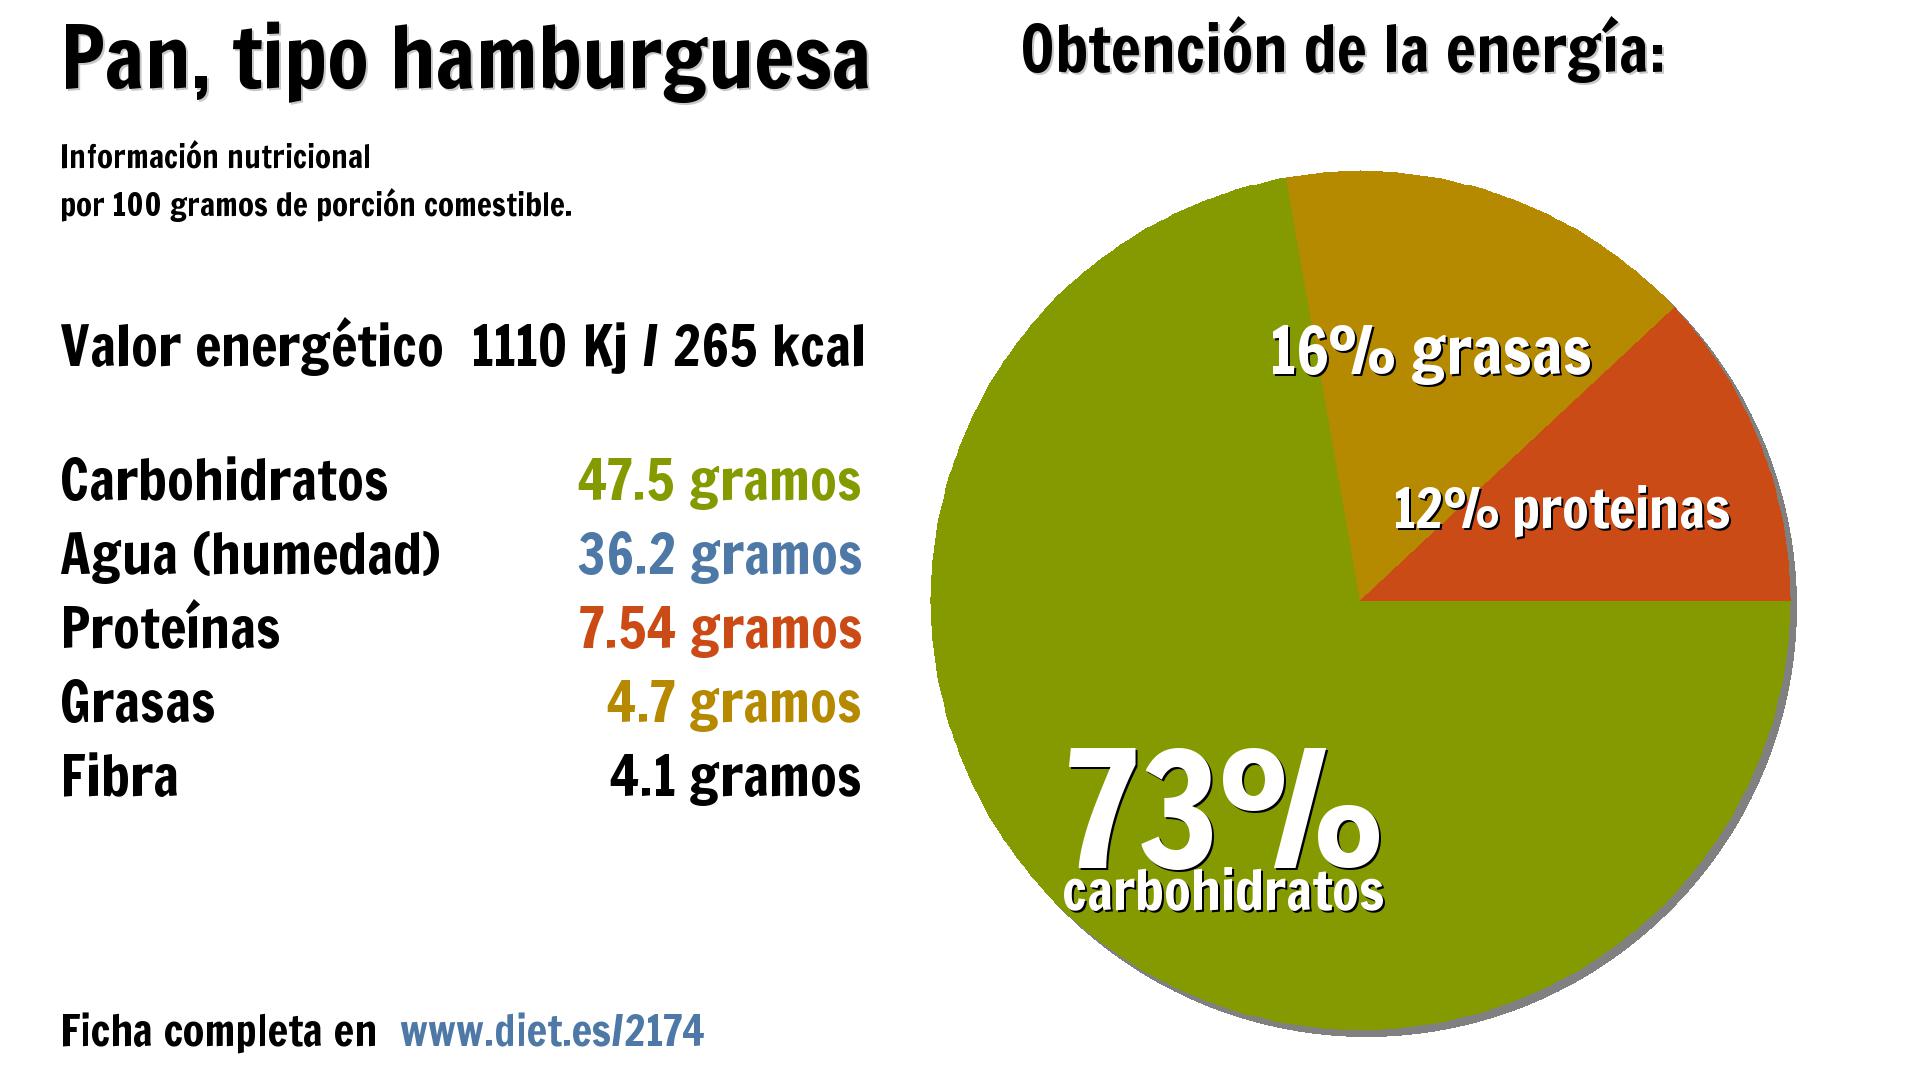 Pan, tipo hamburguesa: energía 1110 Kj, carbohidratos 48 g., agua 36 g., proteínas 8 g., grasas 5 g. y fibra 4 g.